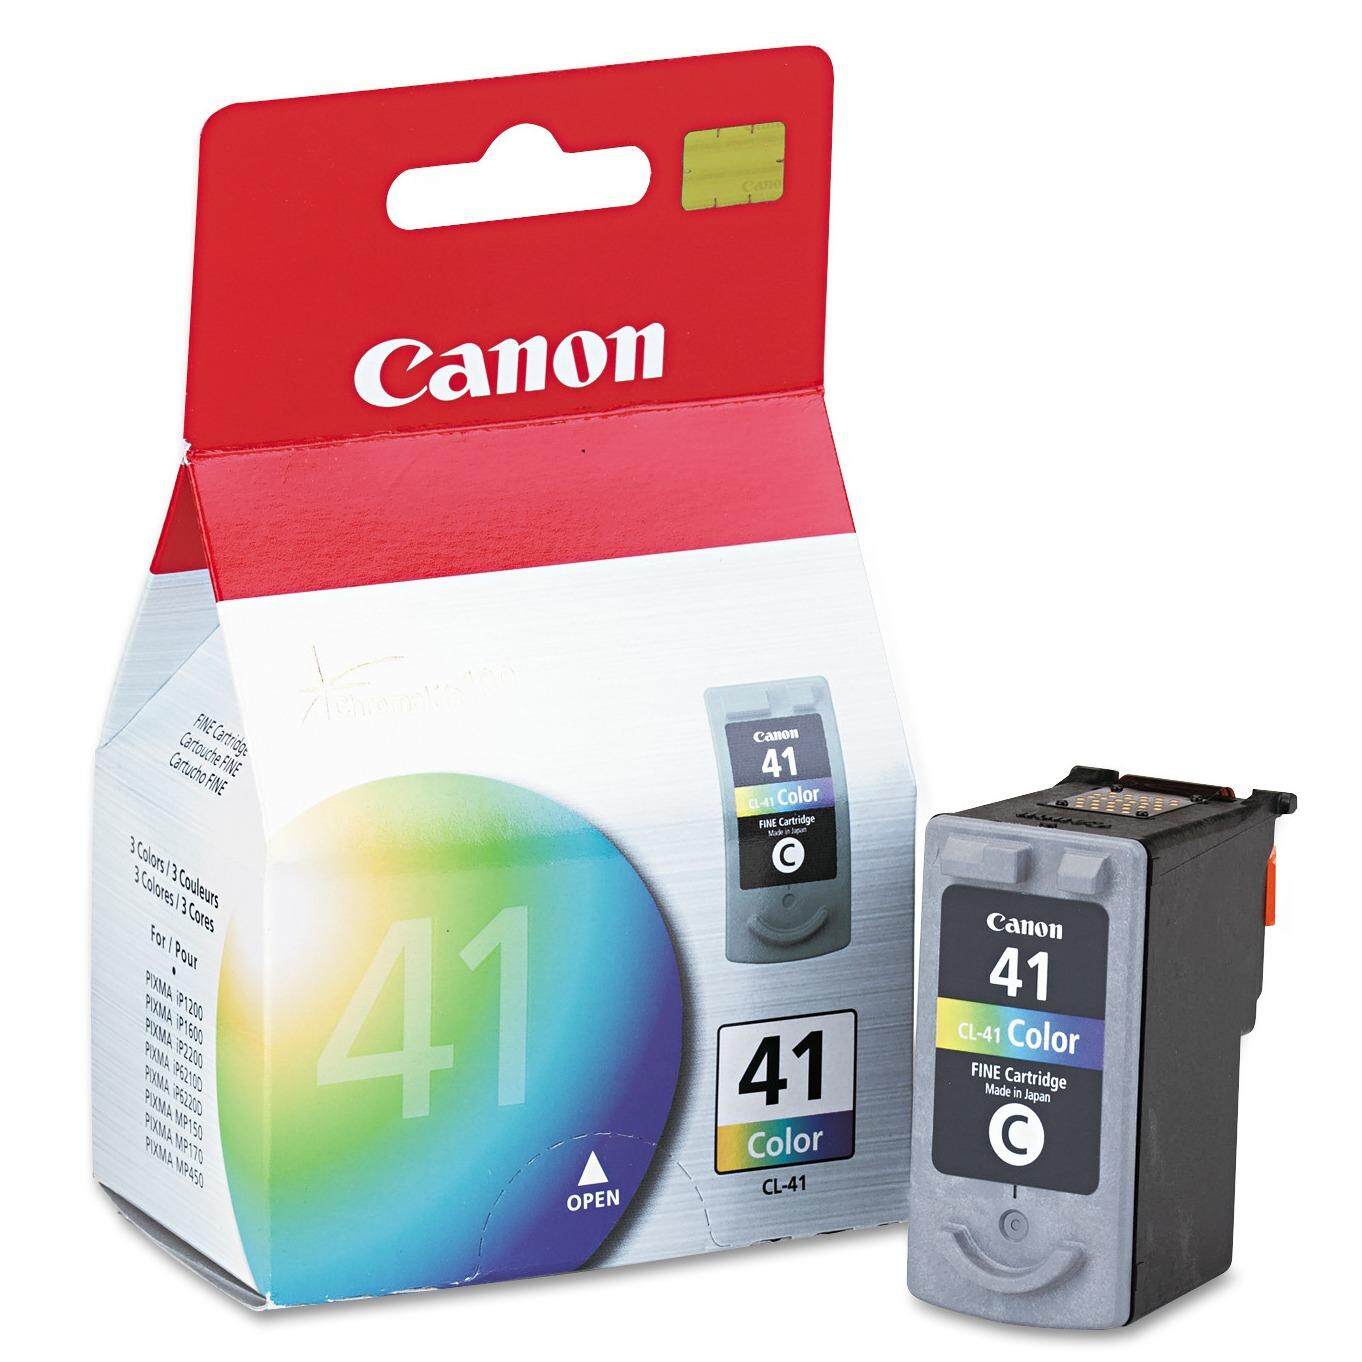 Canon colour cartridge